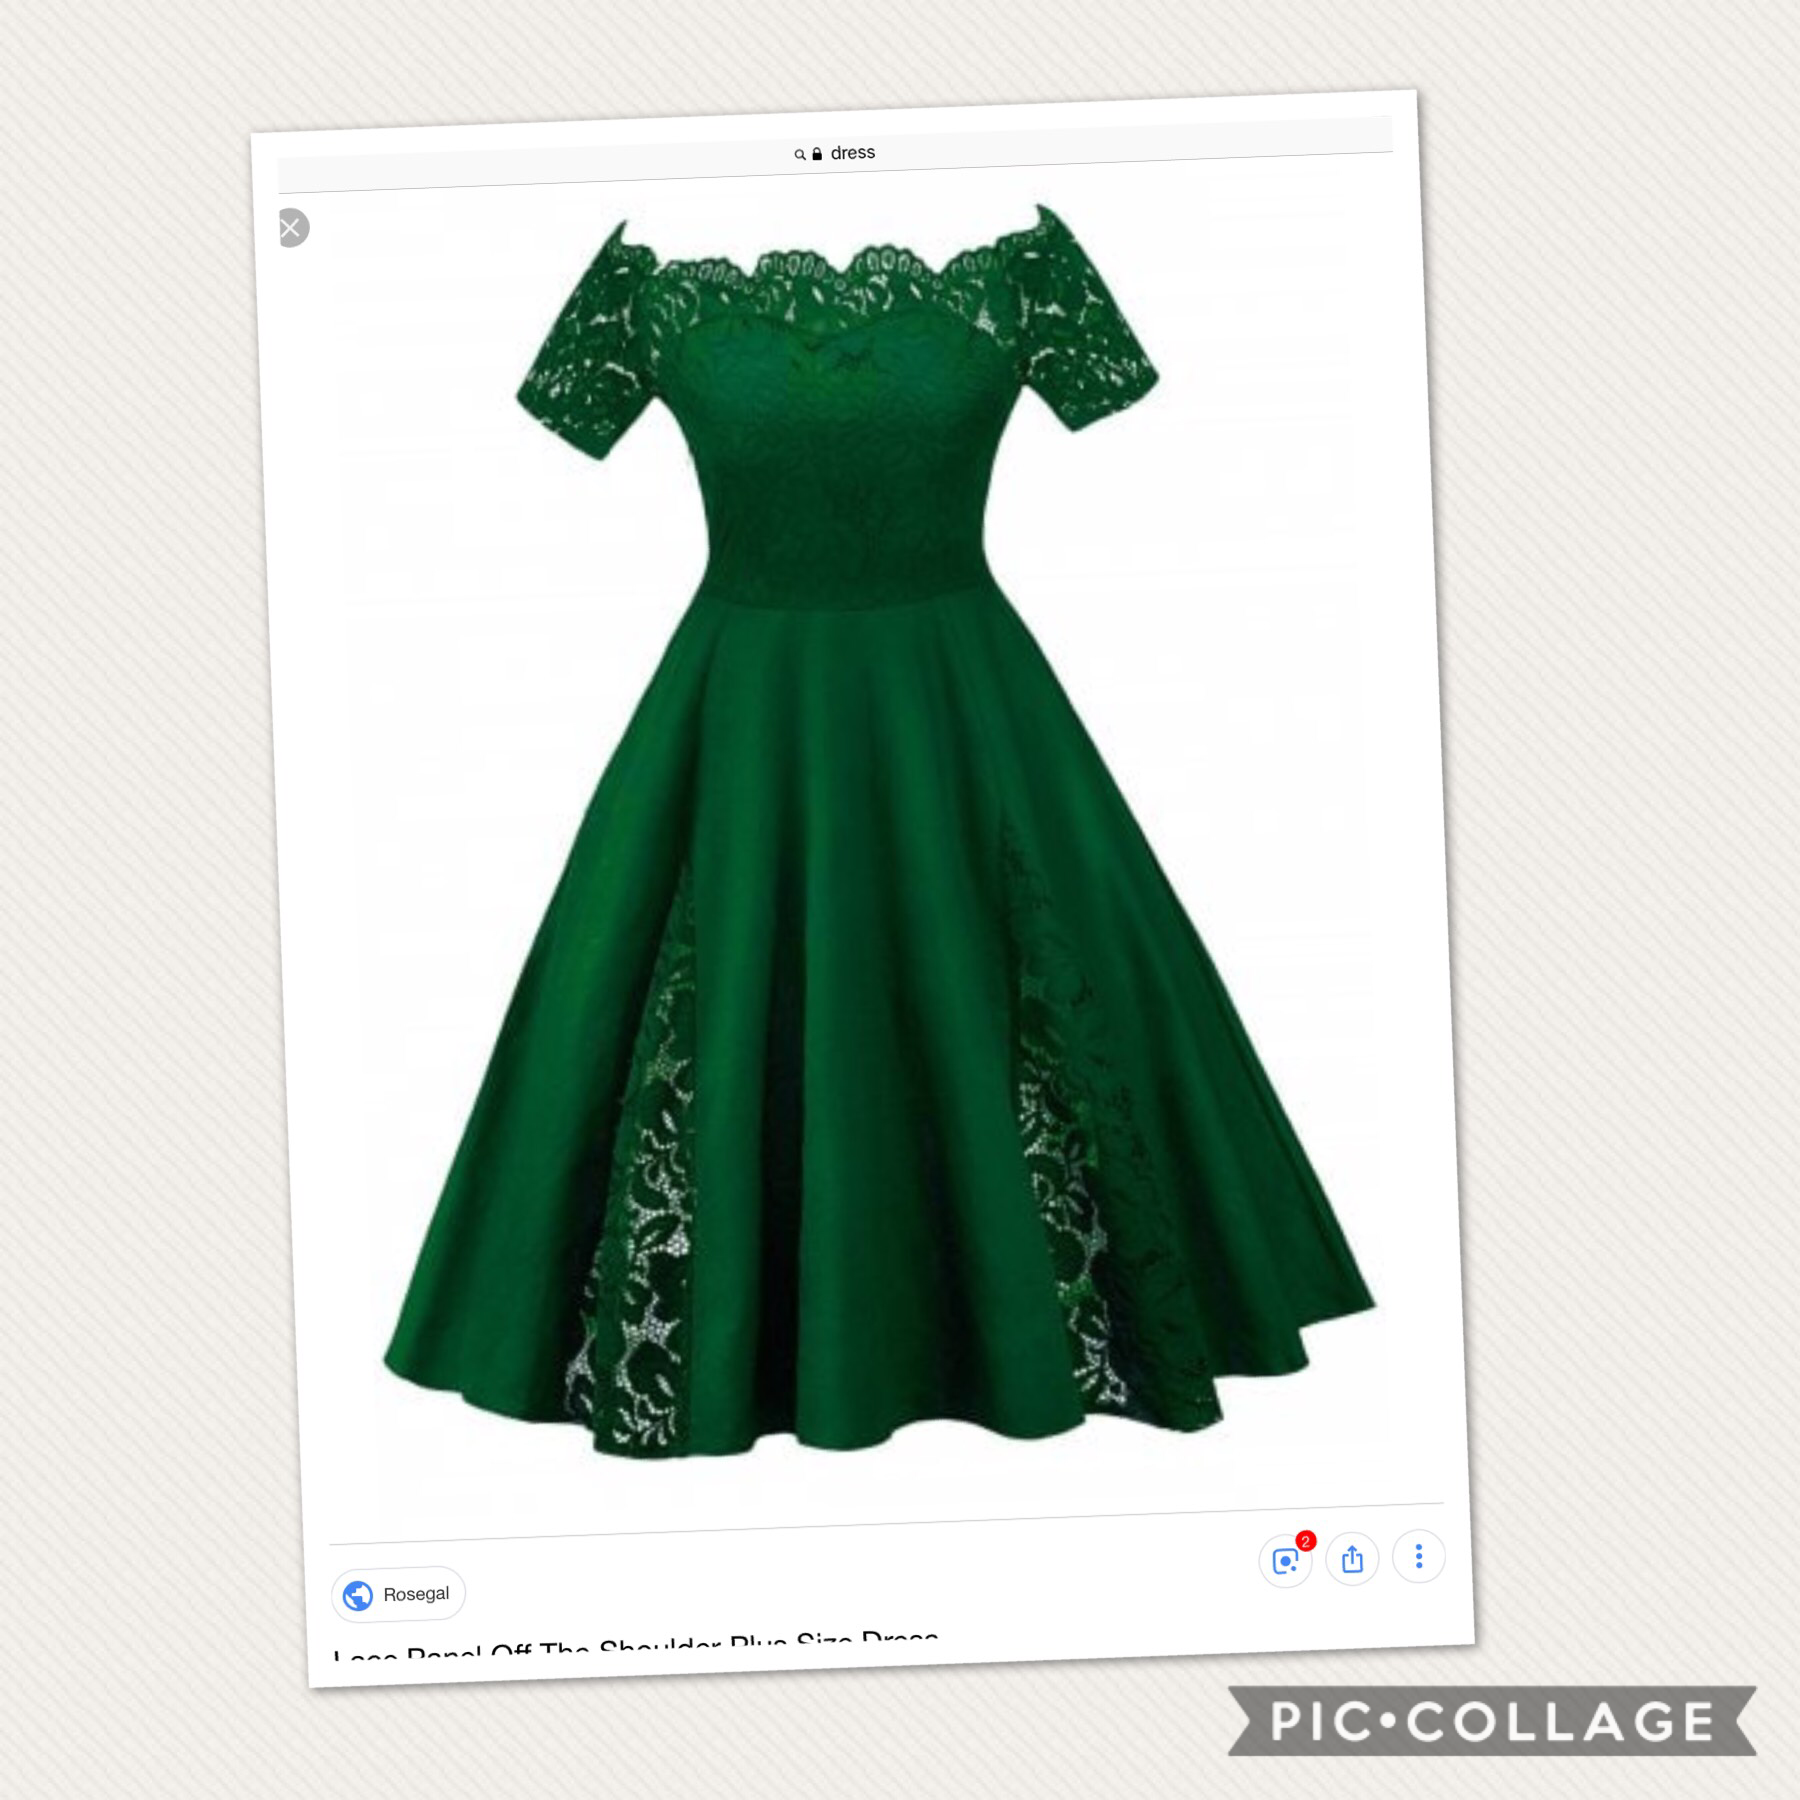 Love this dress